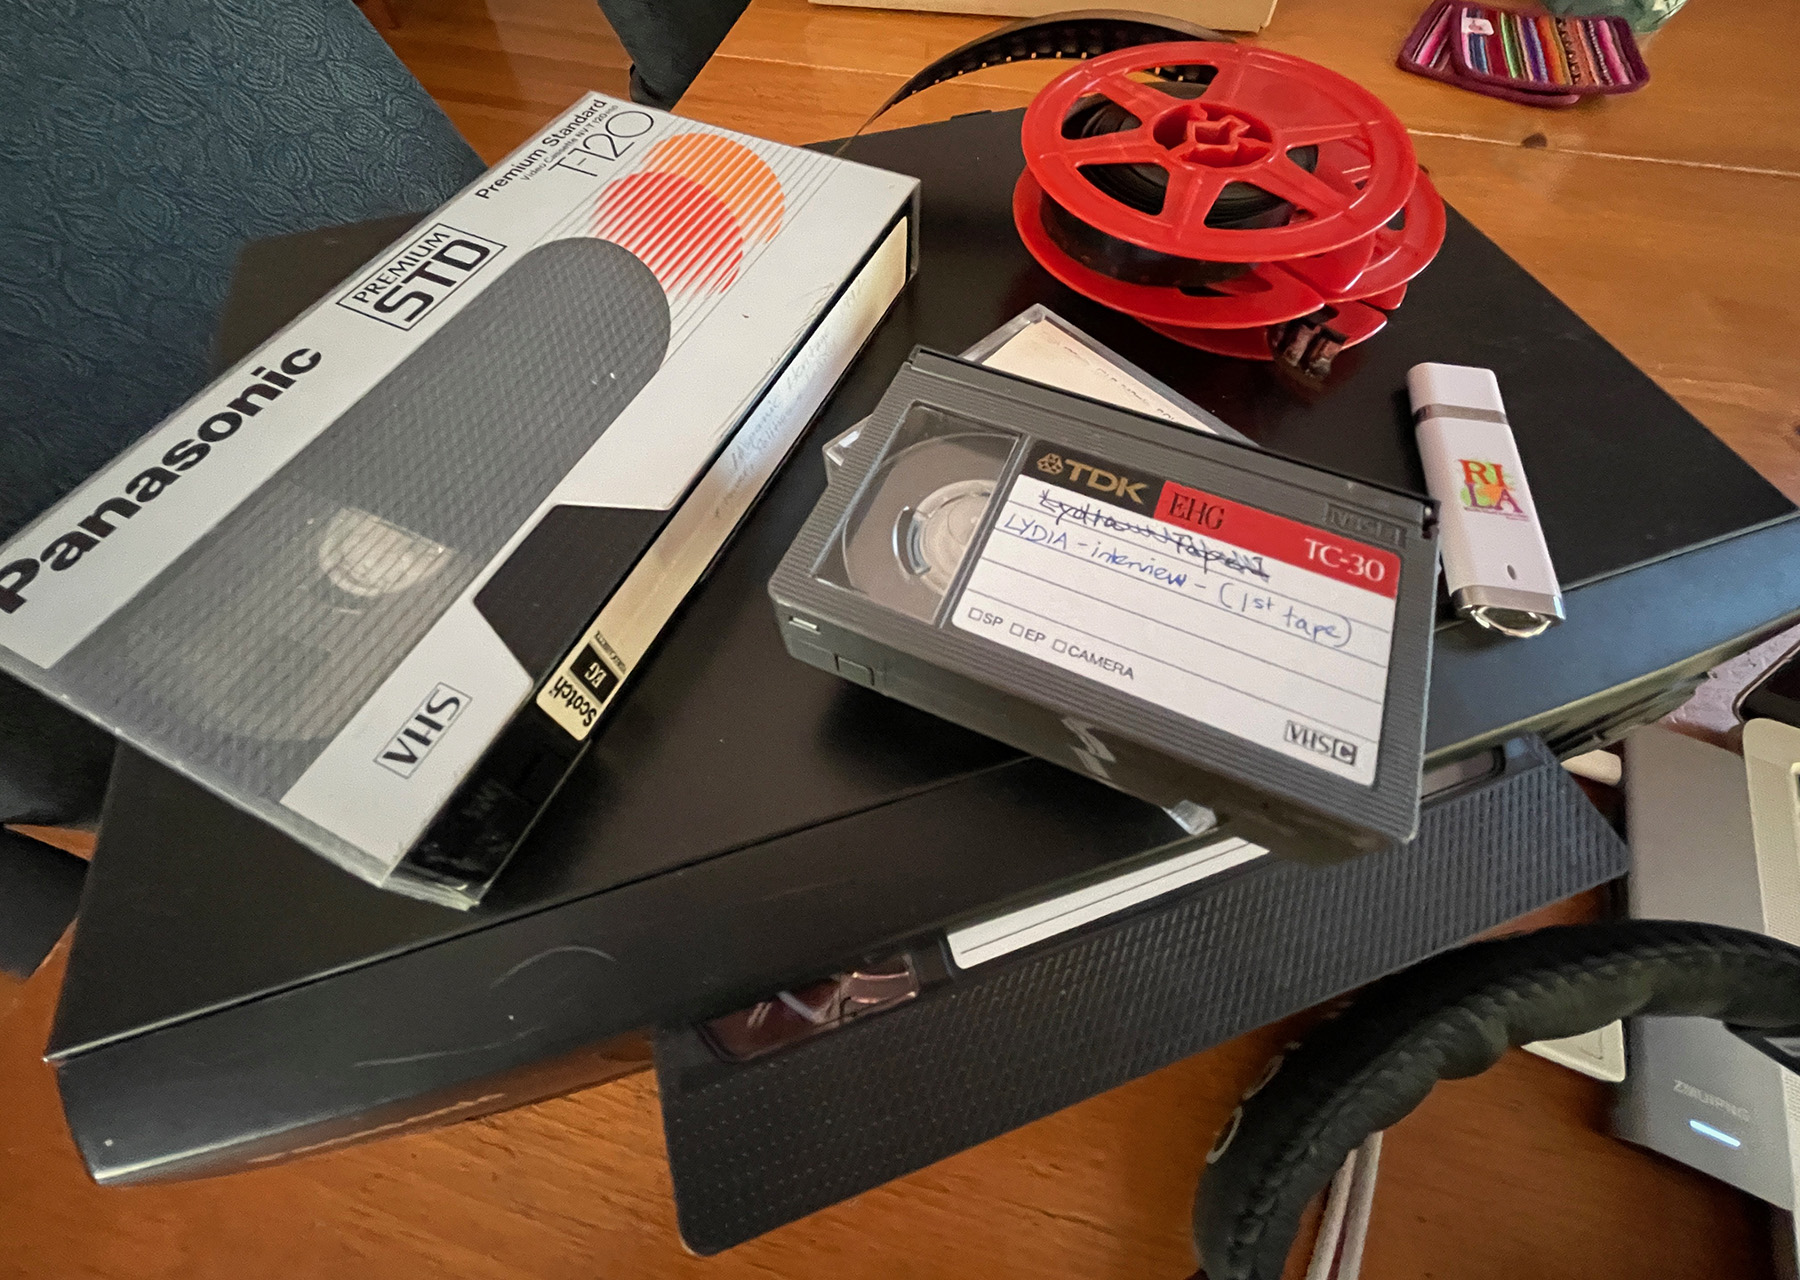  Movies | VHS tape |  Super 8 film 